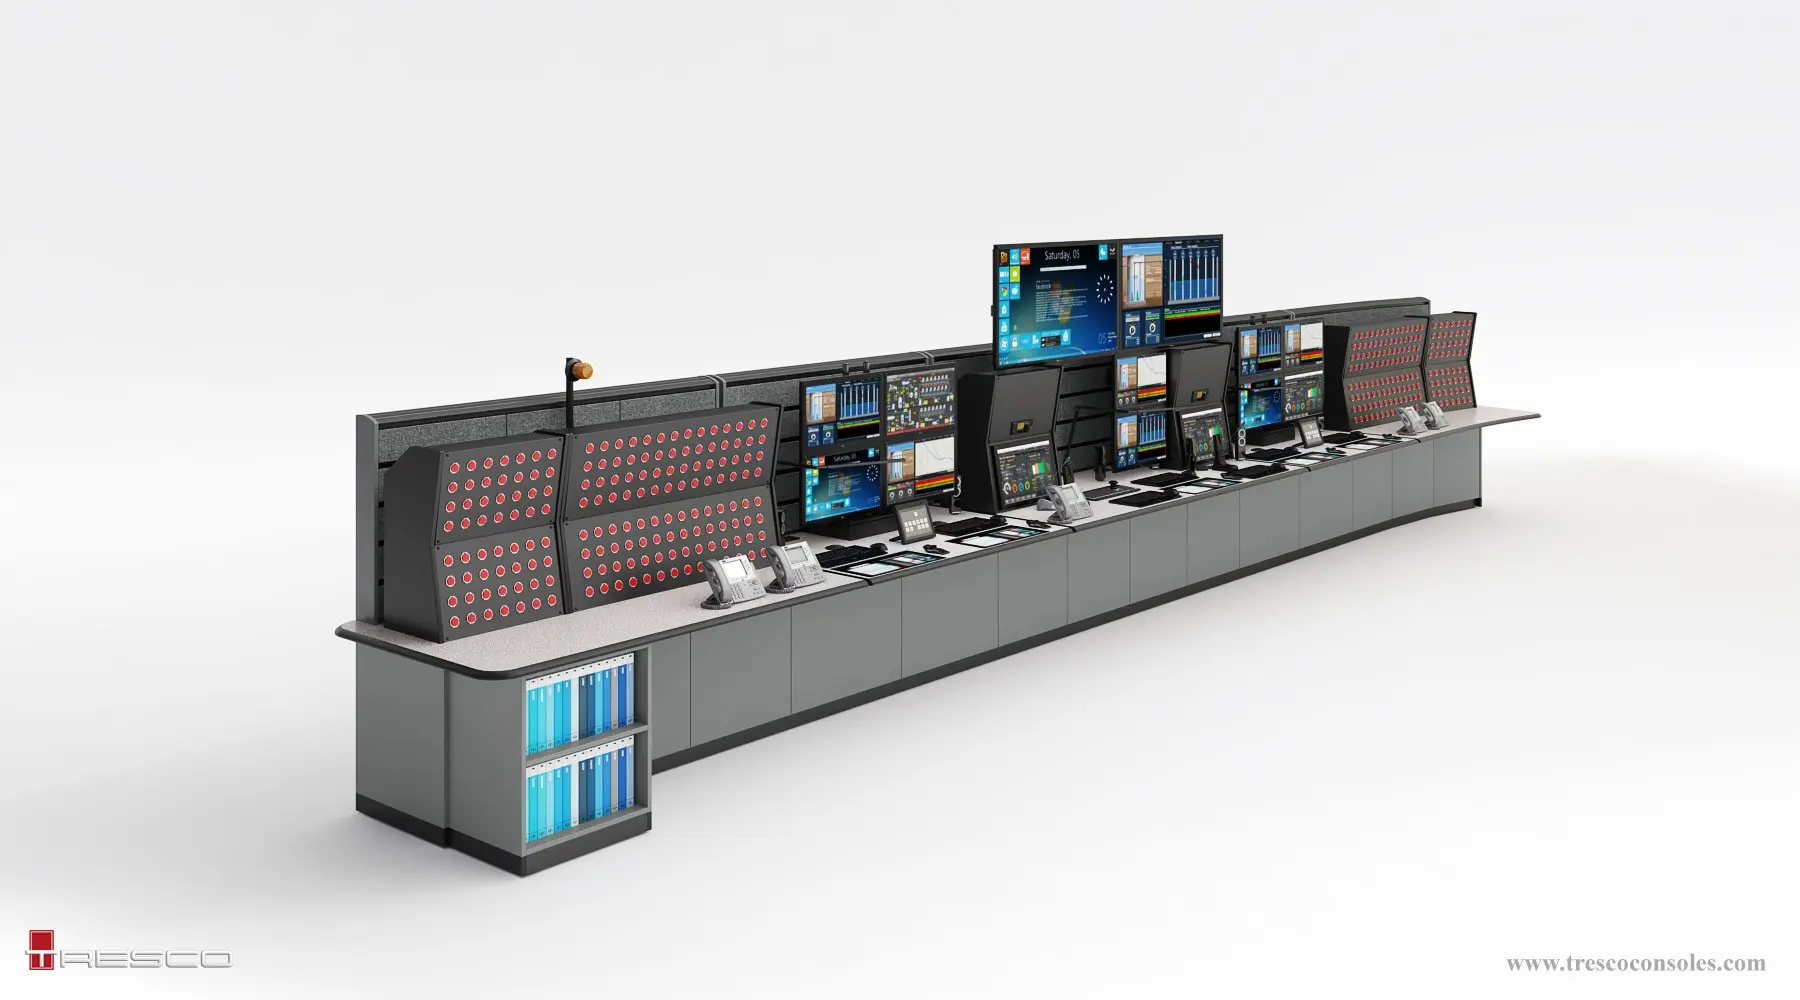 Large Tresco Training & simulation console for a power generation plant